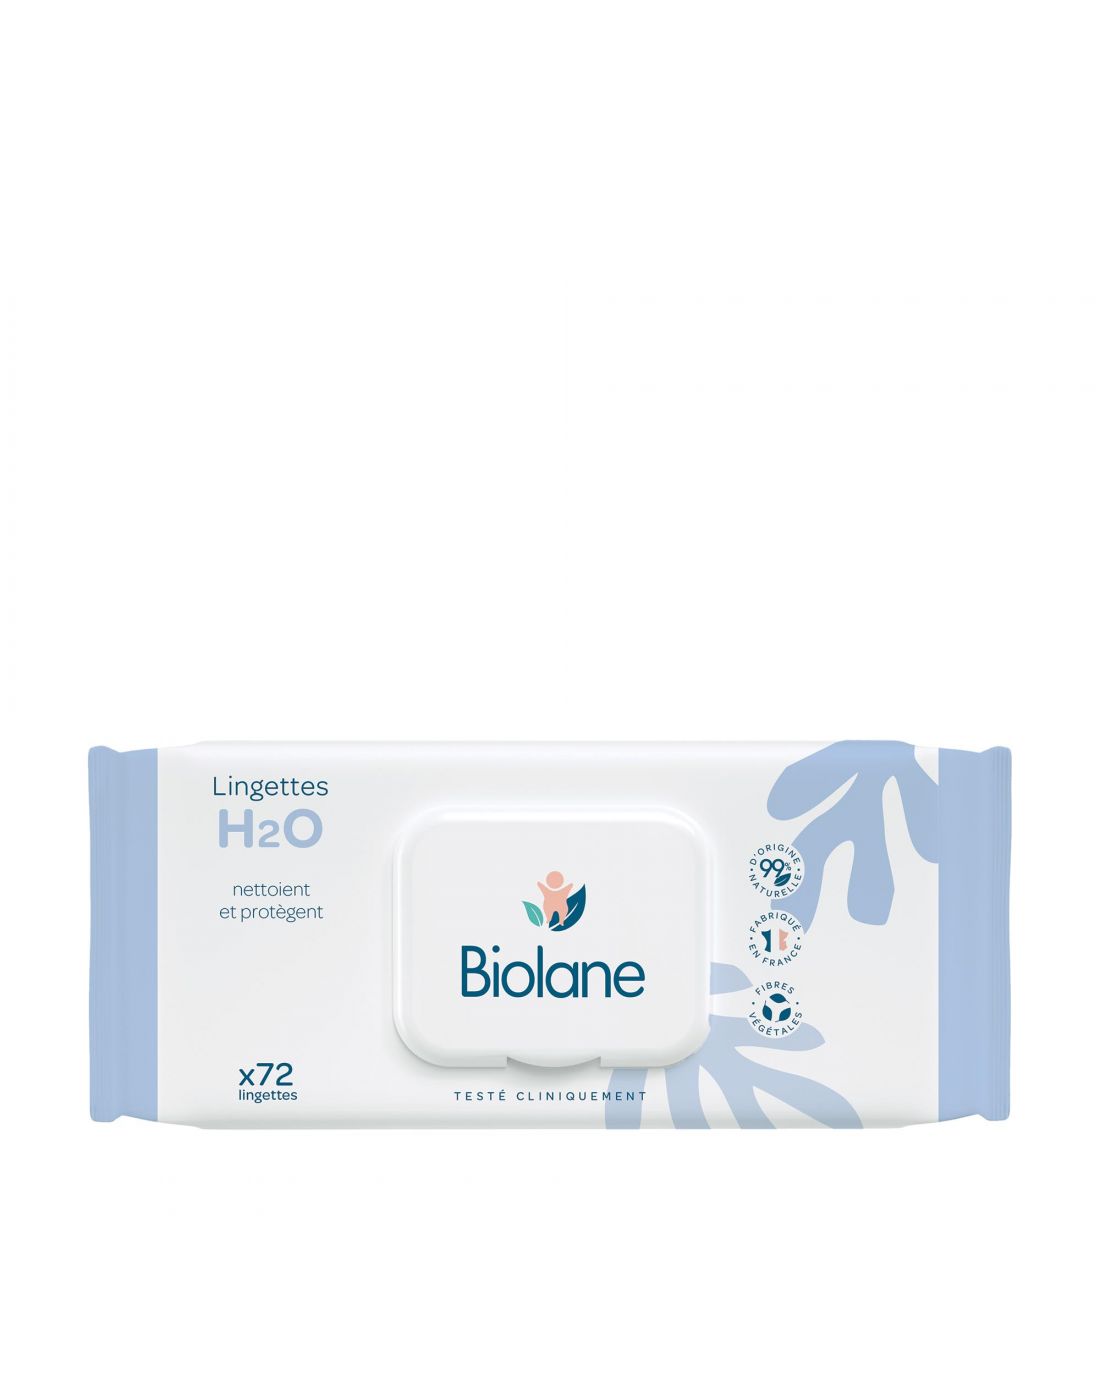 Biolane H2O cleaning wipes